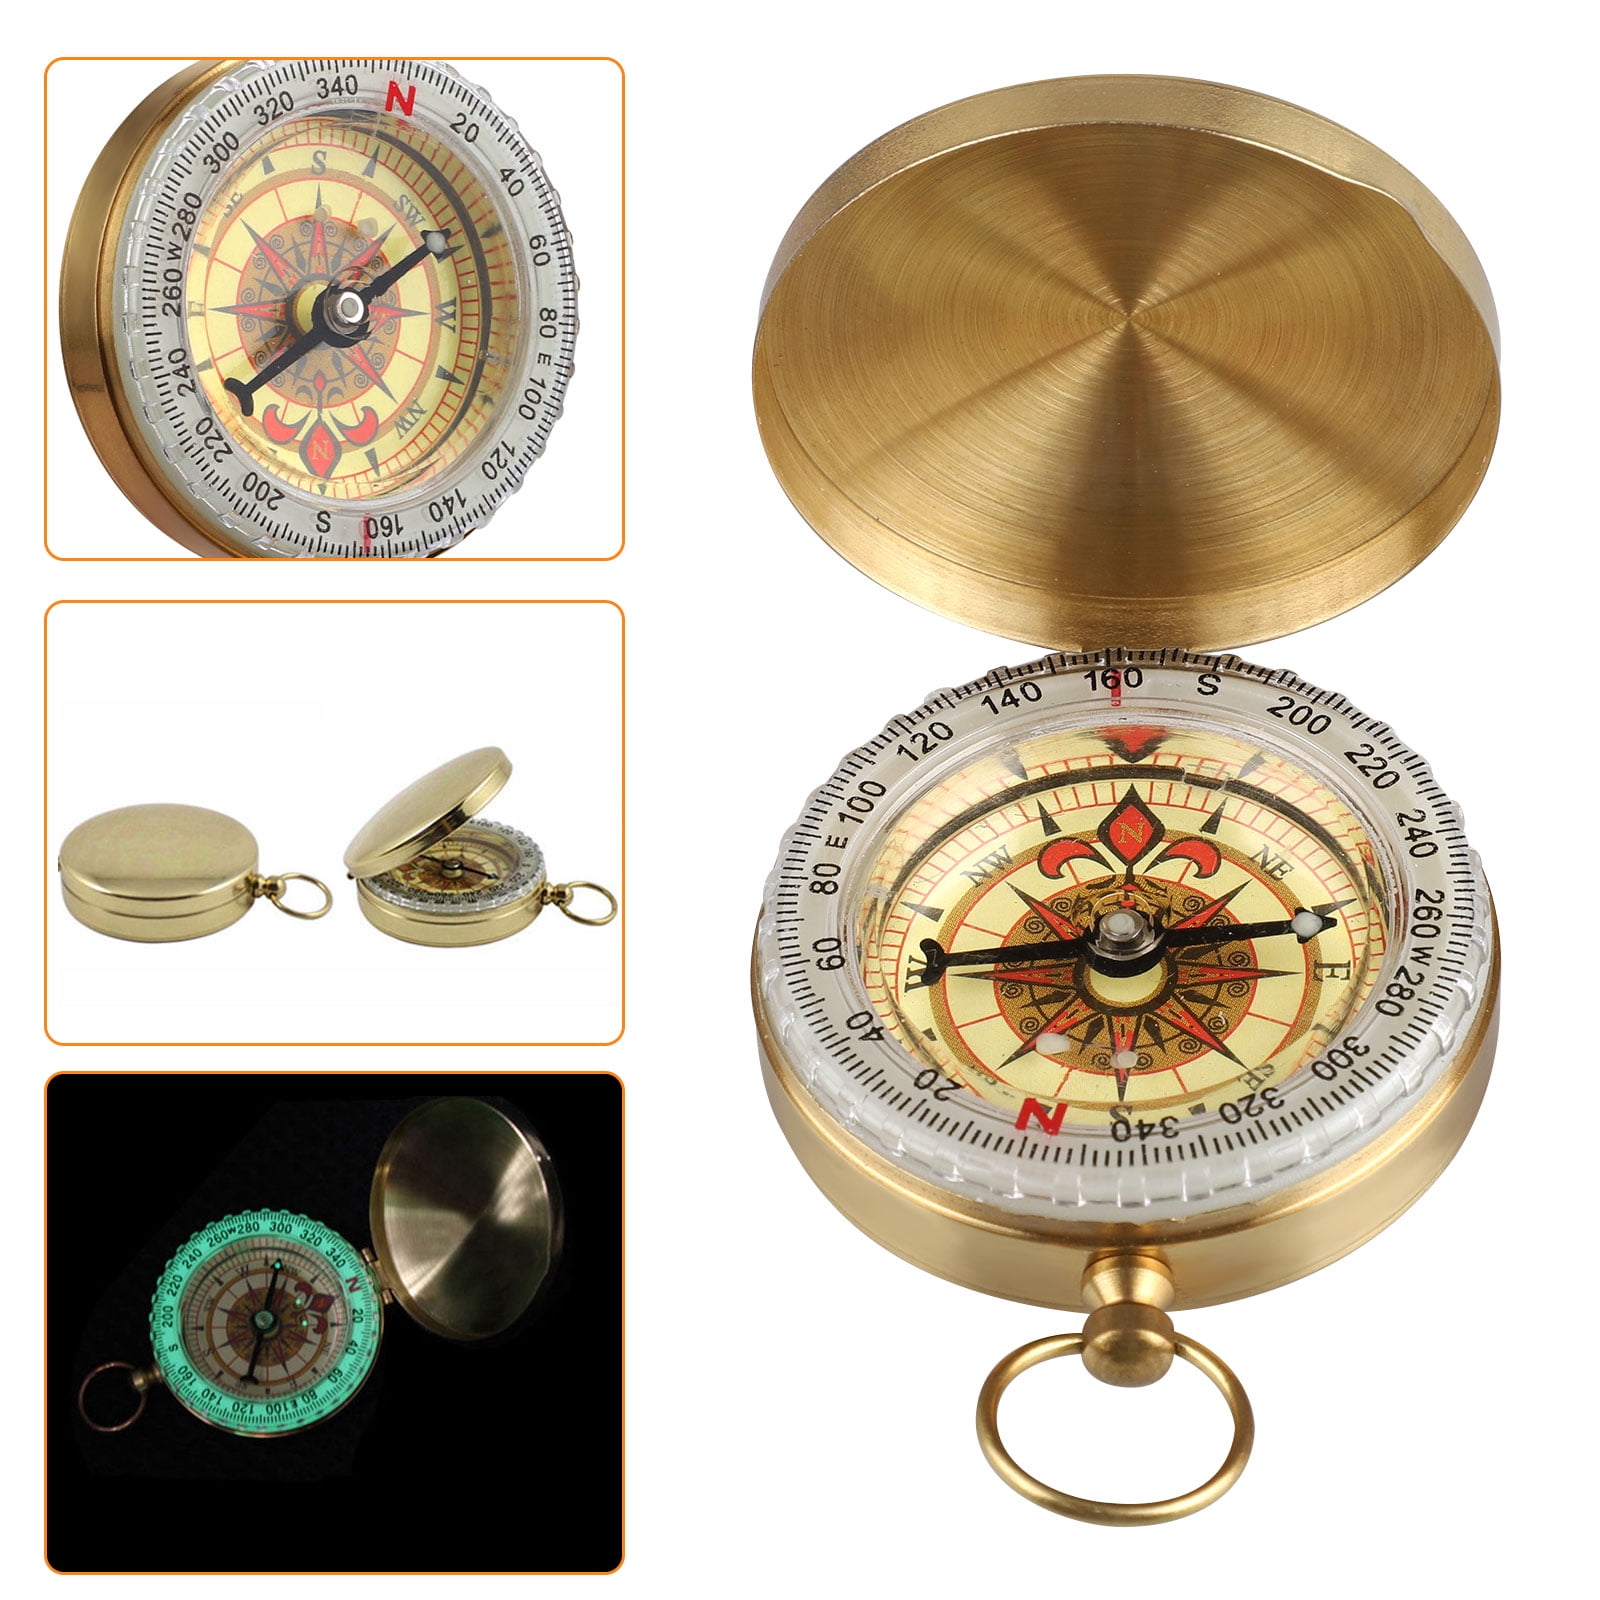 Antique Solid Brass Sundial Compass Adjustable for Navigation Marine Navy Ship